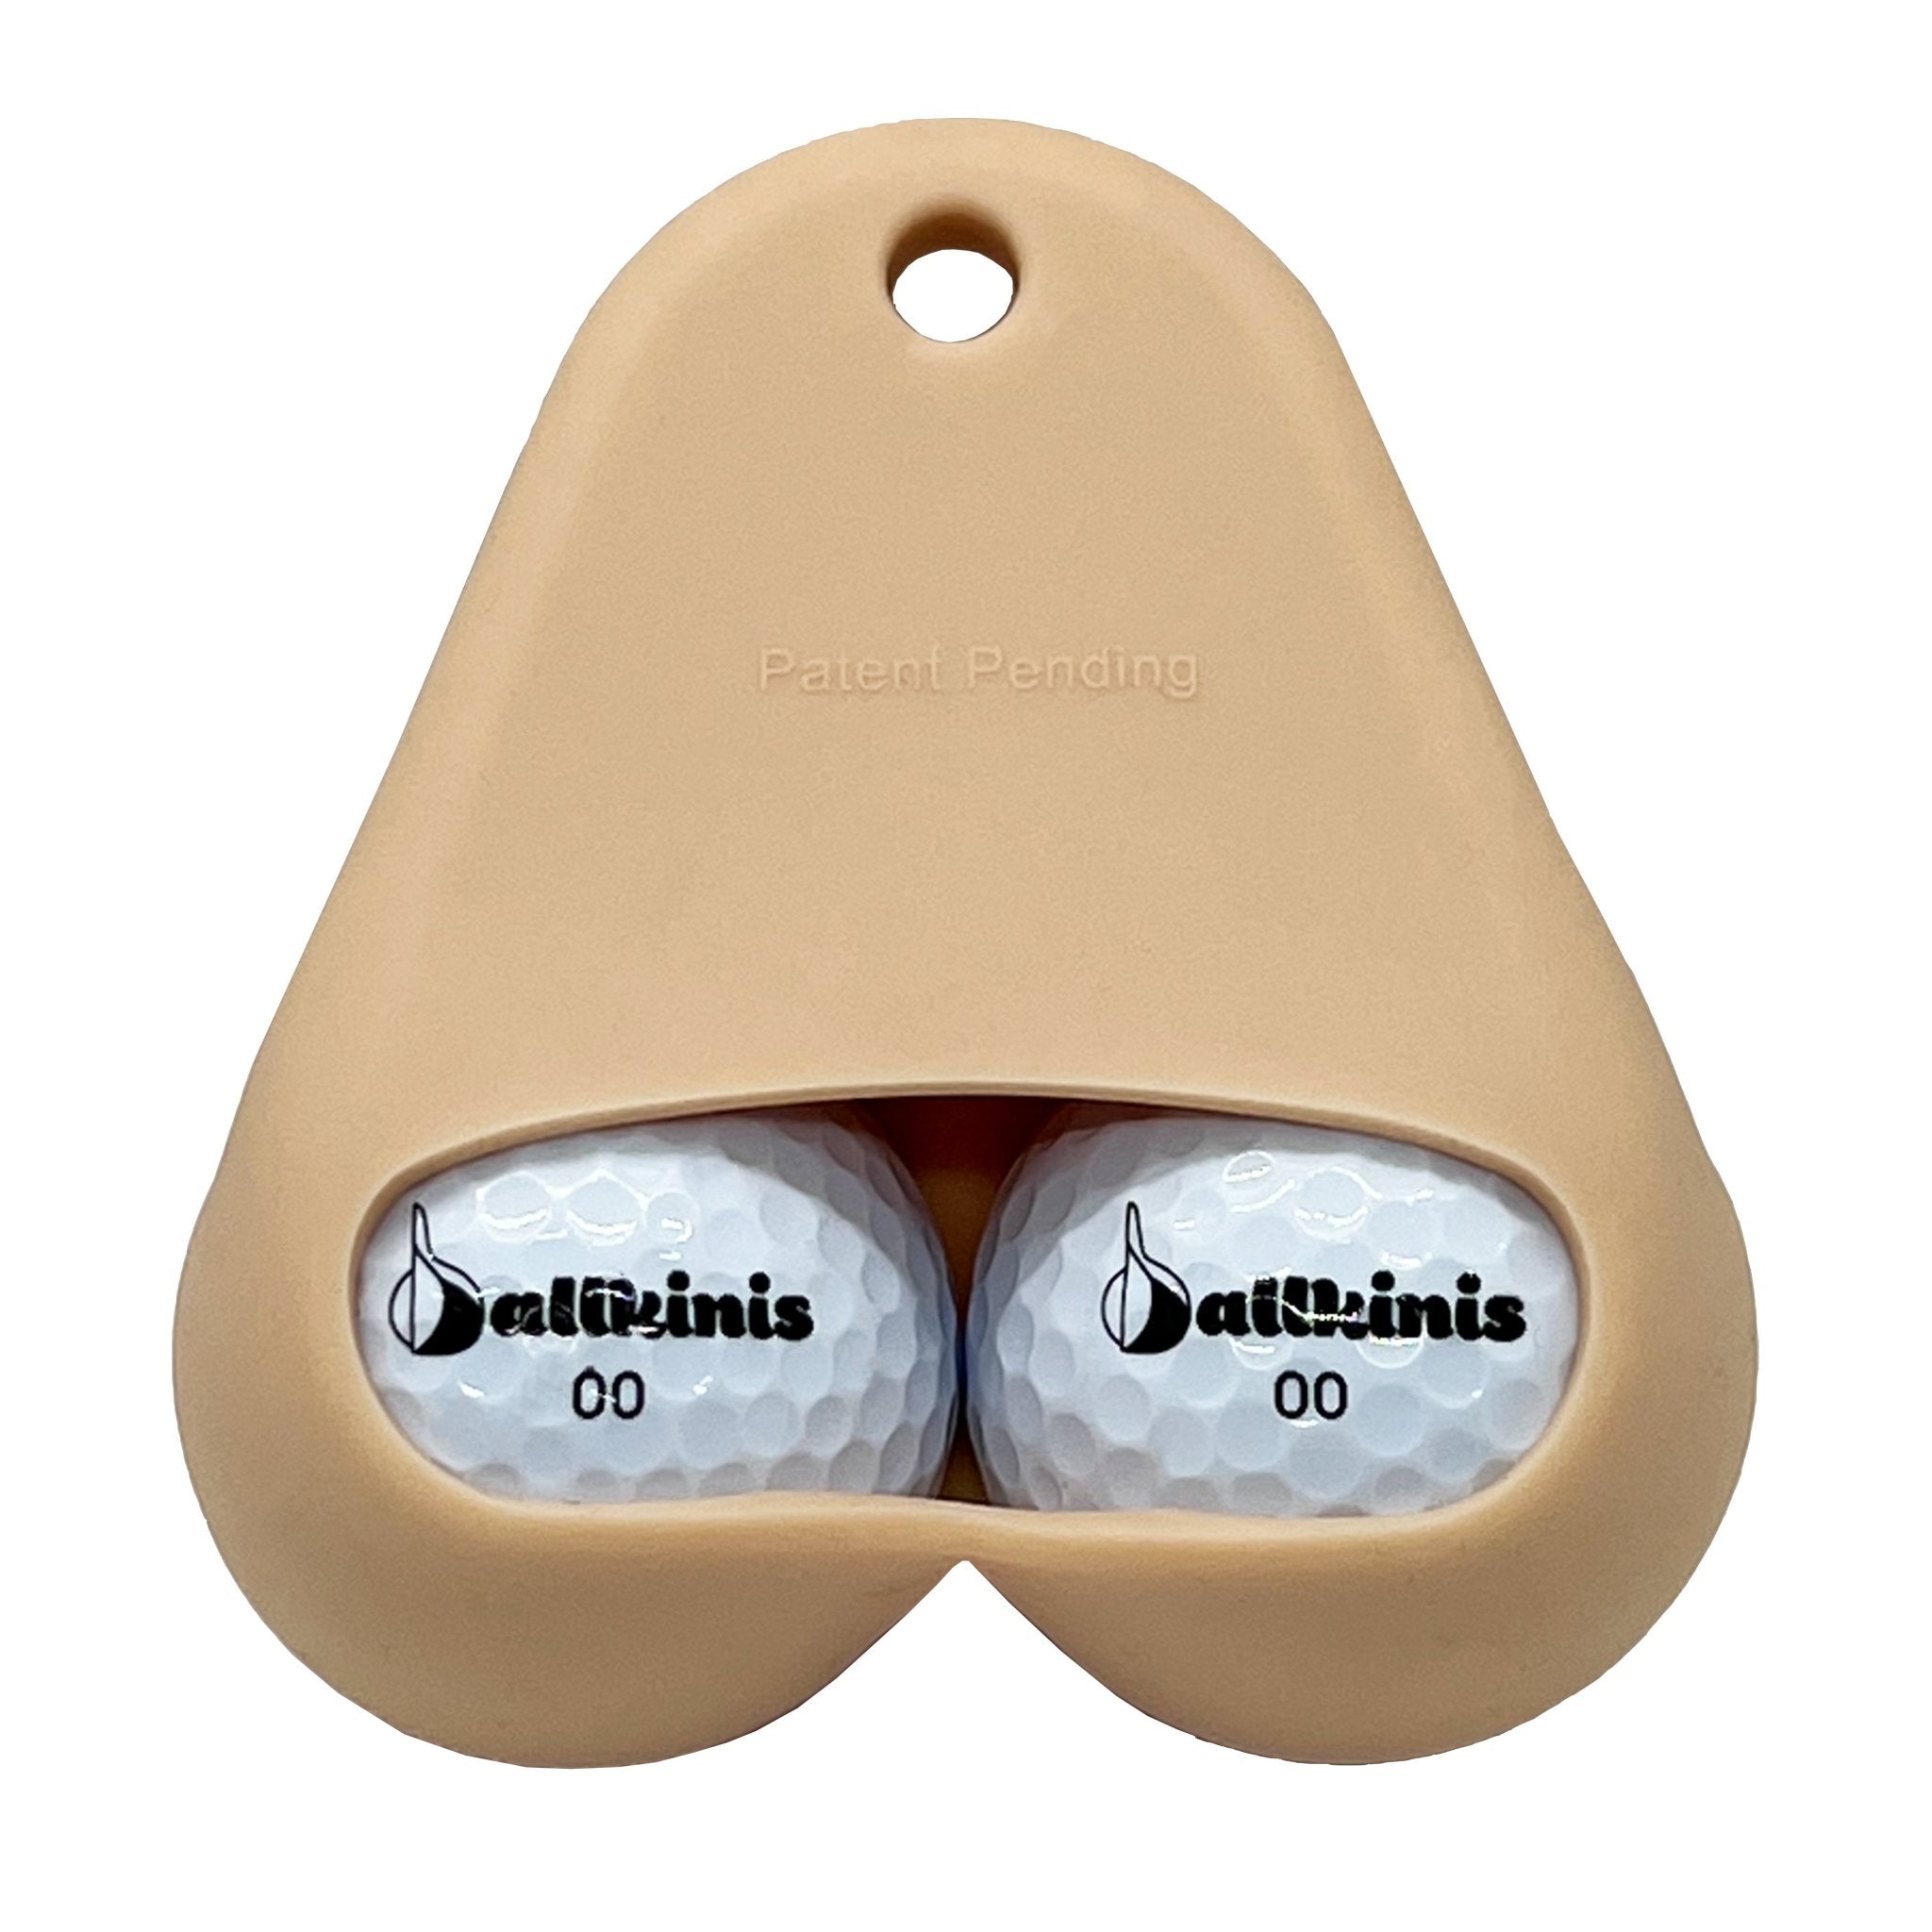 Ballkinis Top USA Bikini Funny Golf Ball Holder Pouch Sack Gift Innovative Souvenirs Club Storage - ballkinis